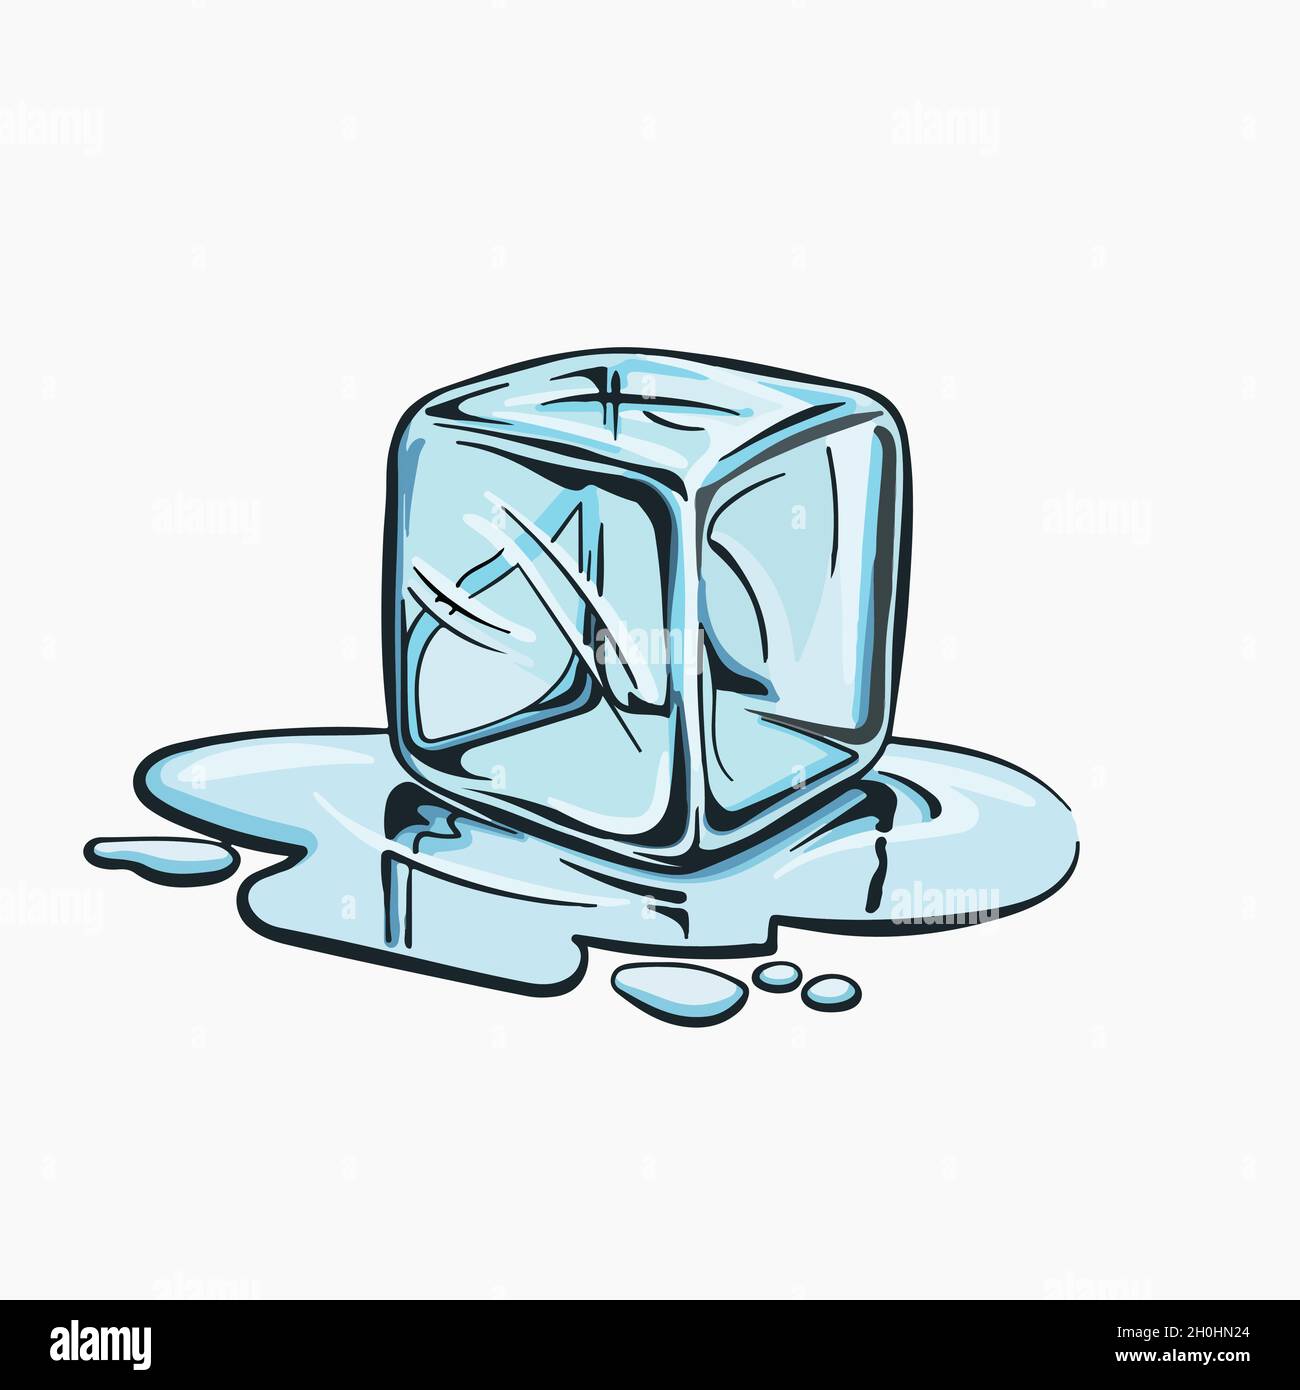 ICE Cube Vector Illustration Cartoon Clipart Image Vectorielle Stock - Alamy